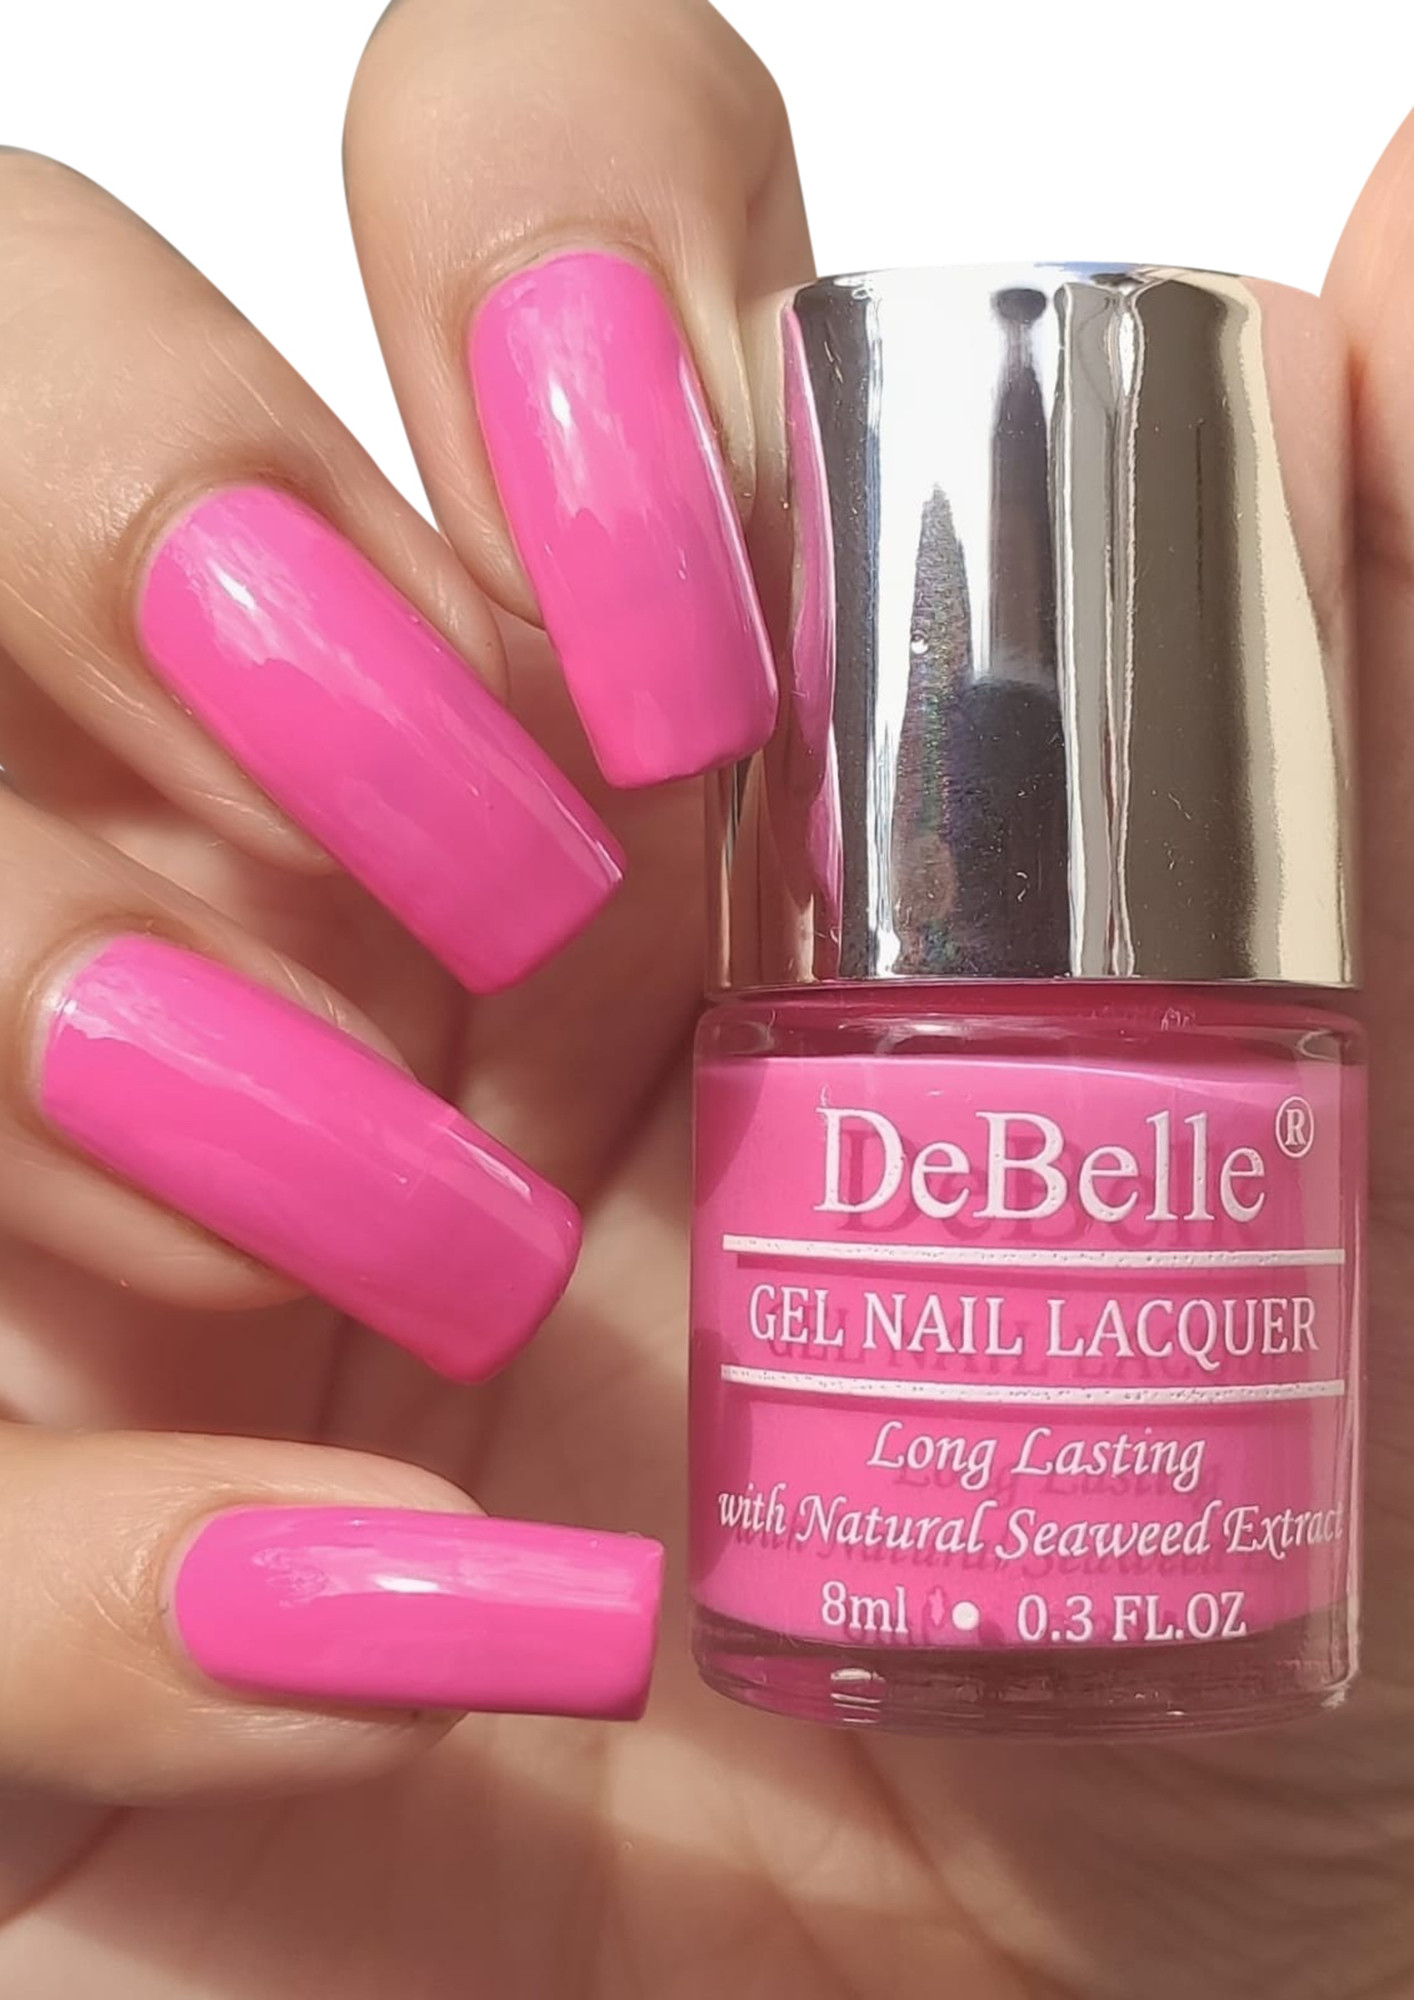 DeBelle Gel Nail Lacquer Strawberry Souffle' Bubblegum Pink Nail Polish